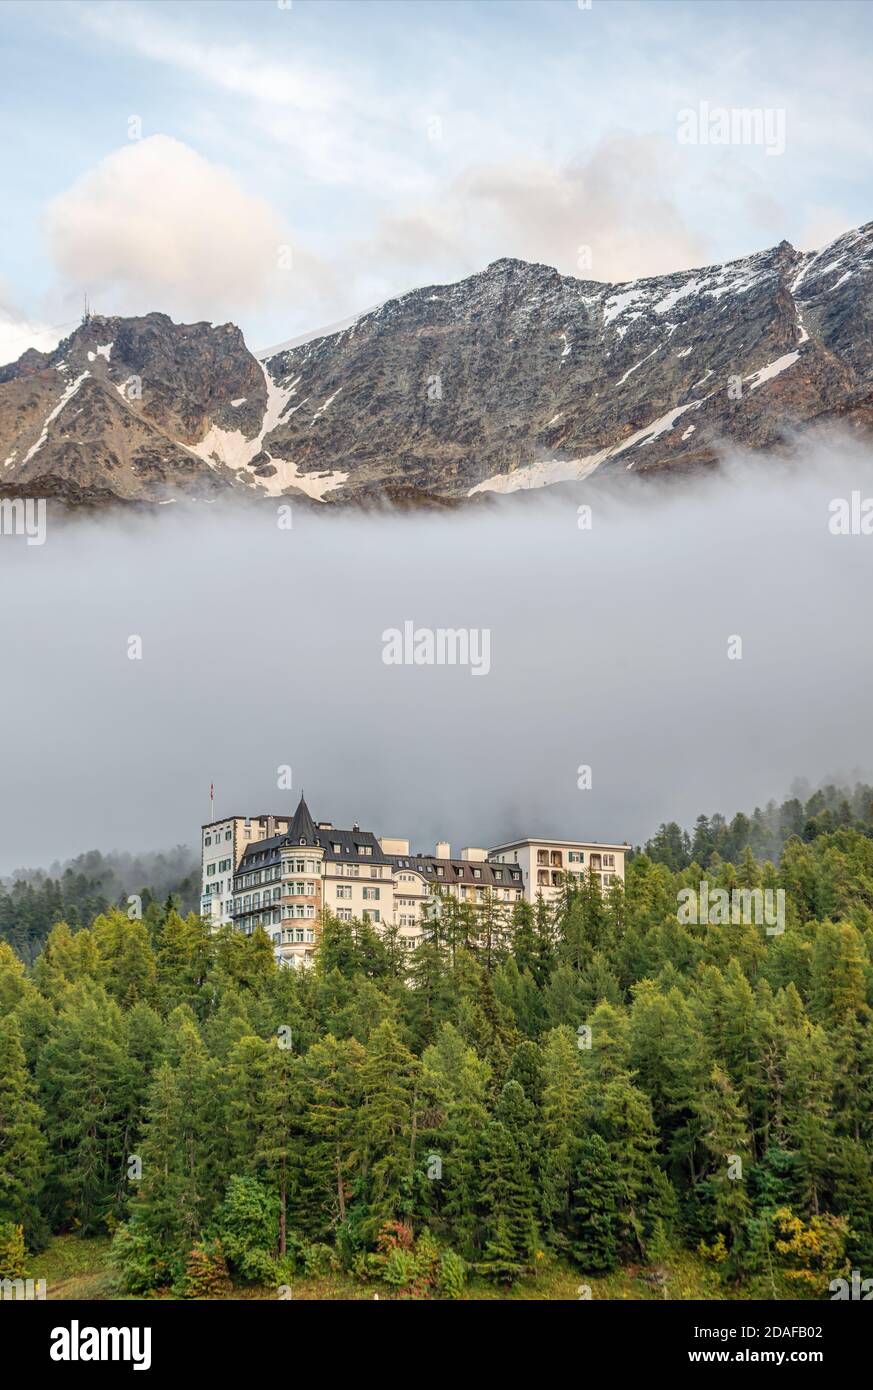 Waldhaus Hotel in un paesaggio montano panoramico, Sils-Maria, Svizzera Foto Stock